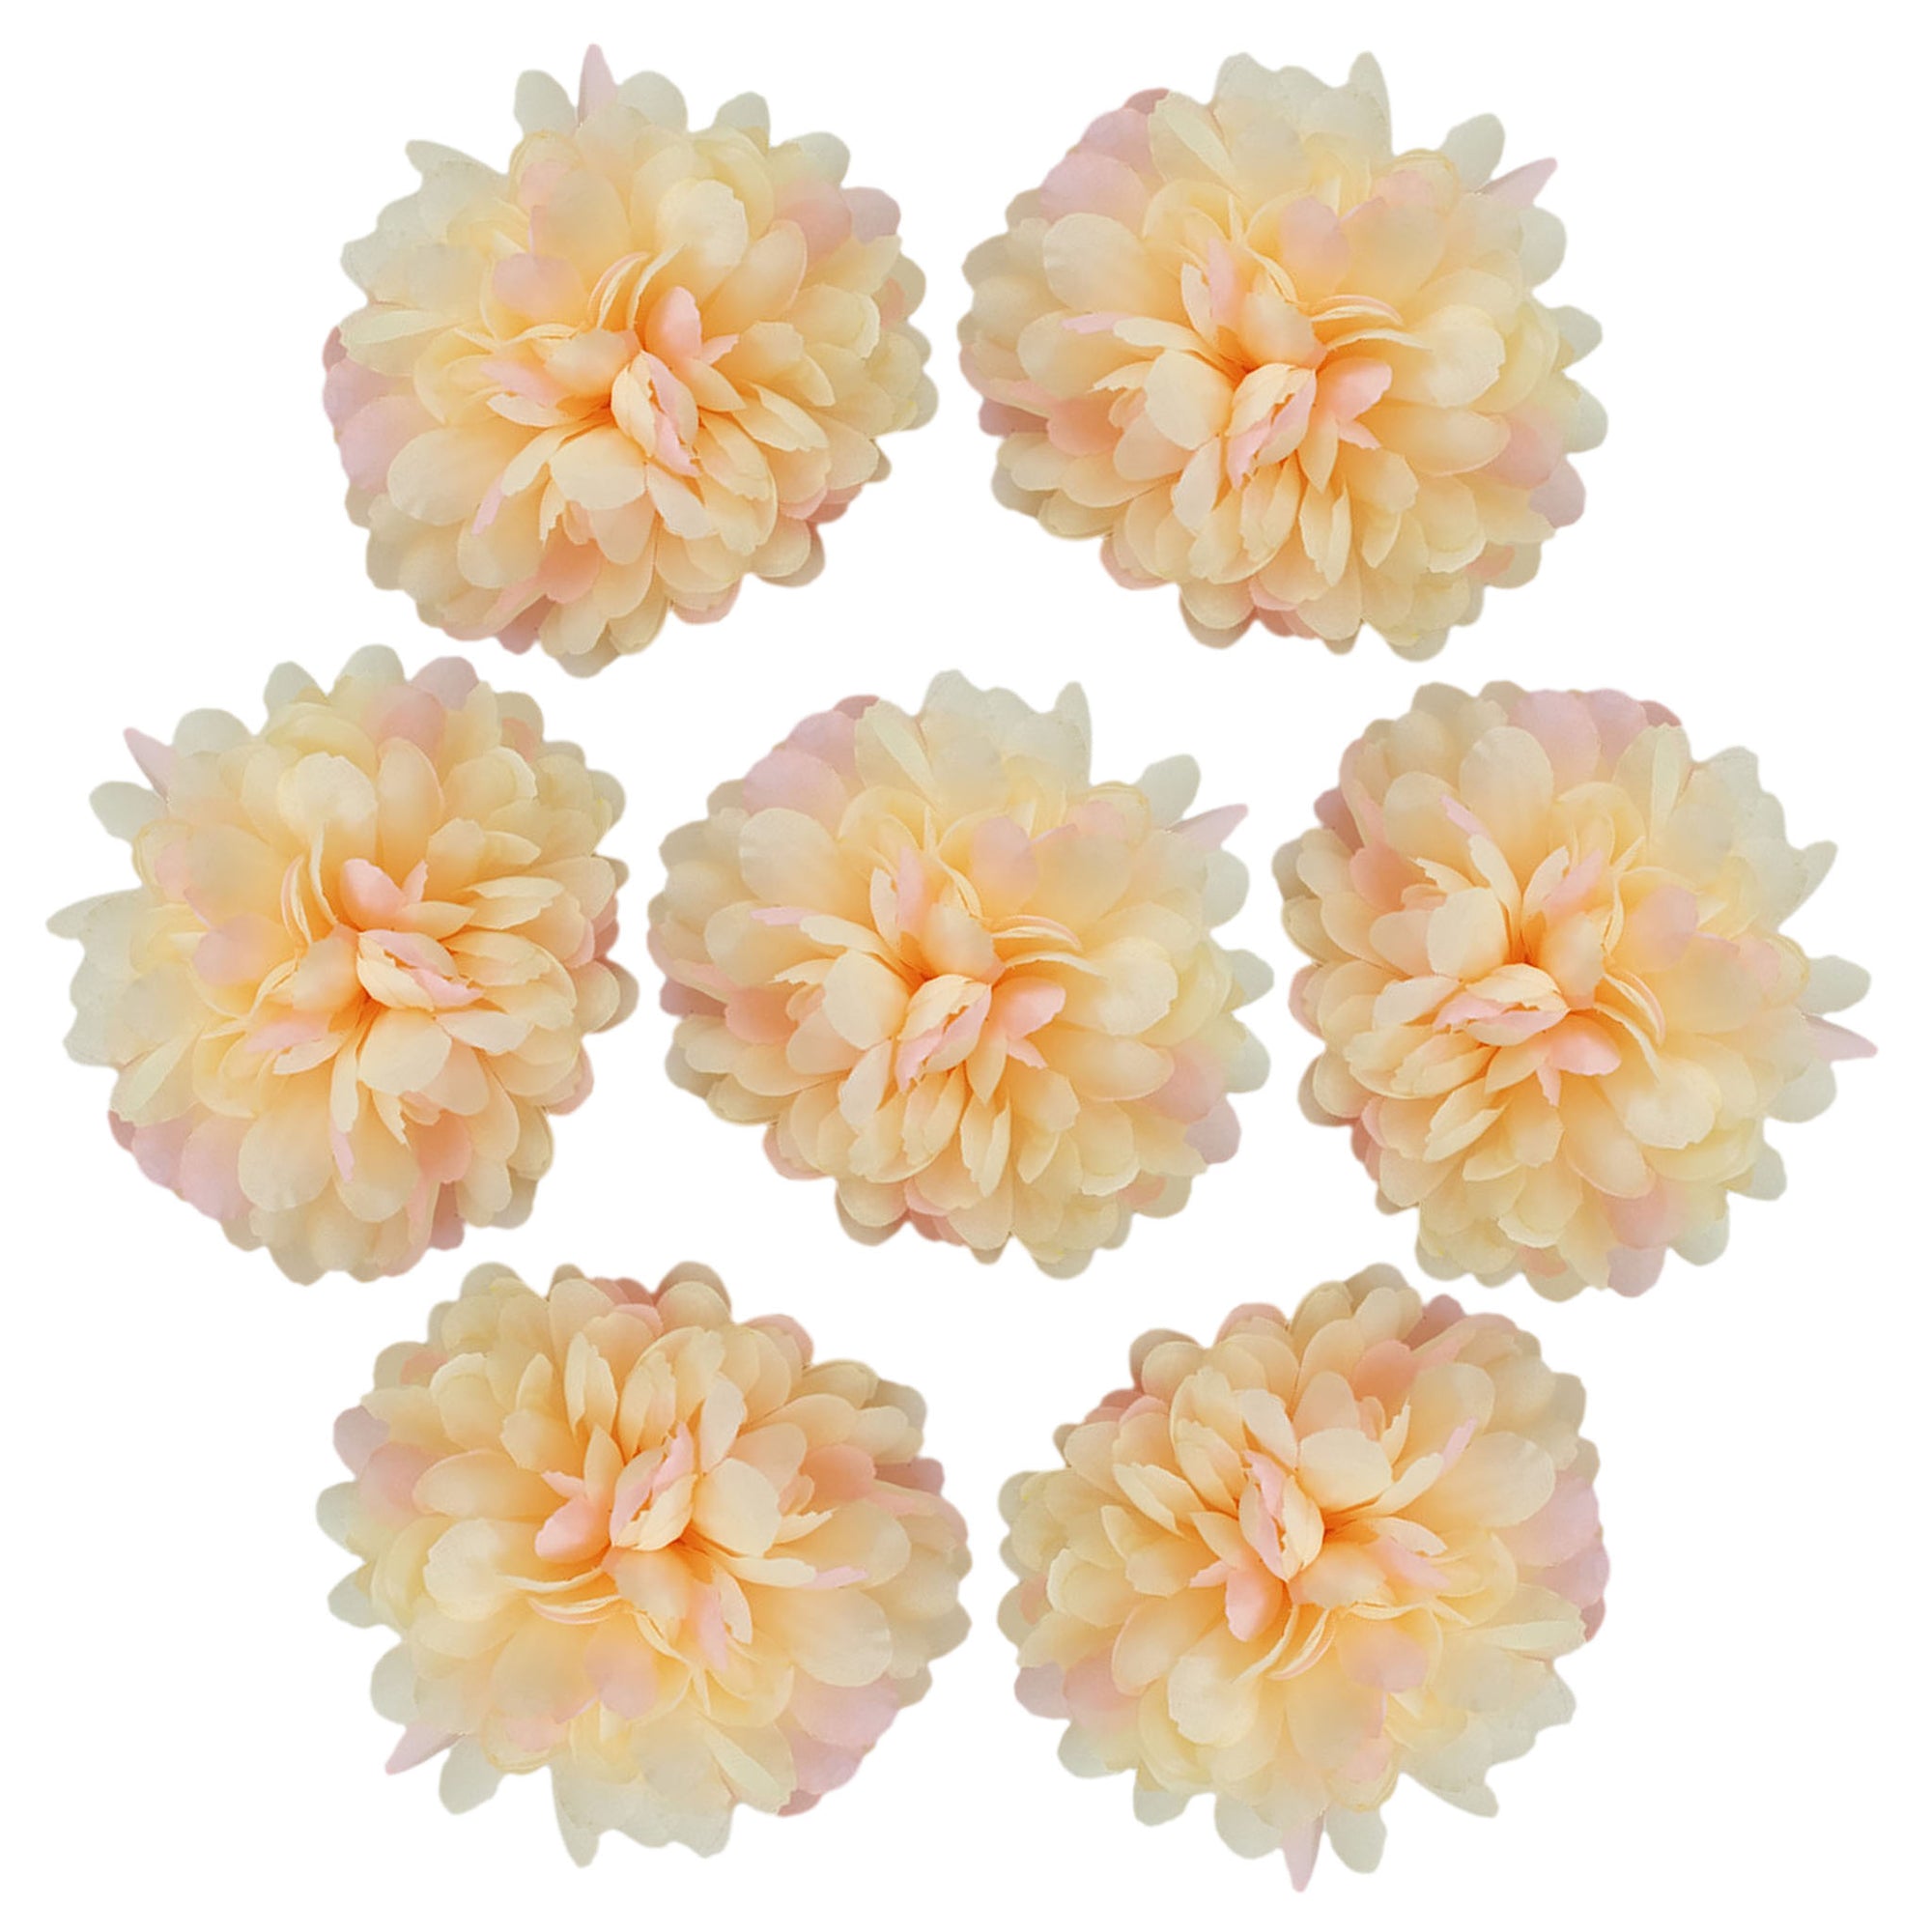 Silk Flowers Bulk Artificial Daisy Flower Heads Wholesale Bulk 100 pcs